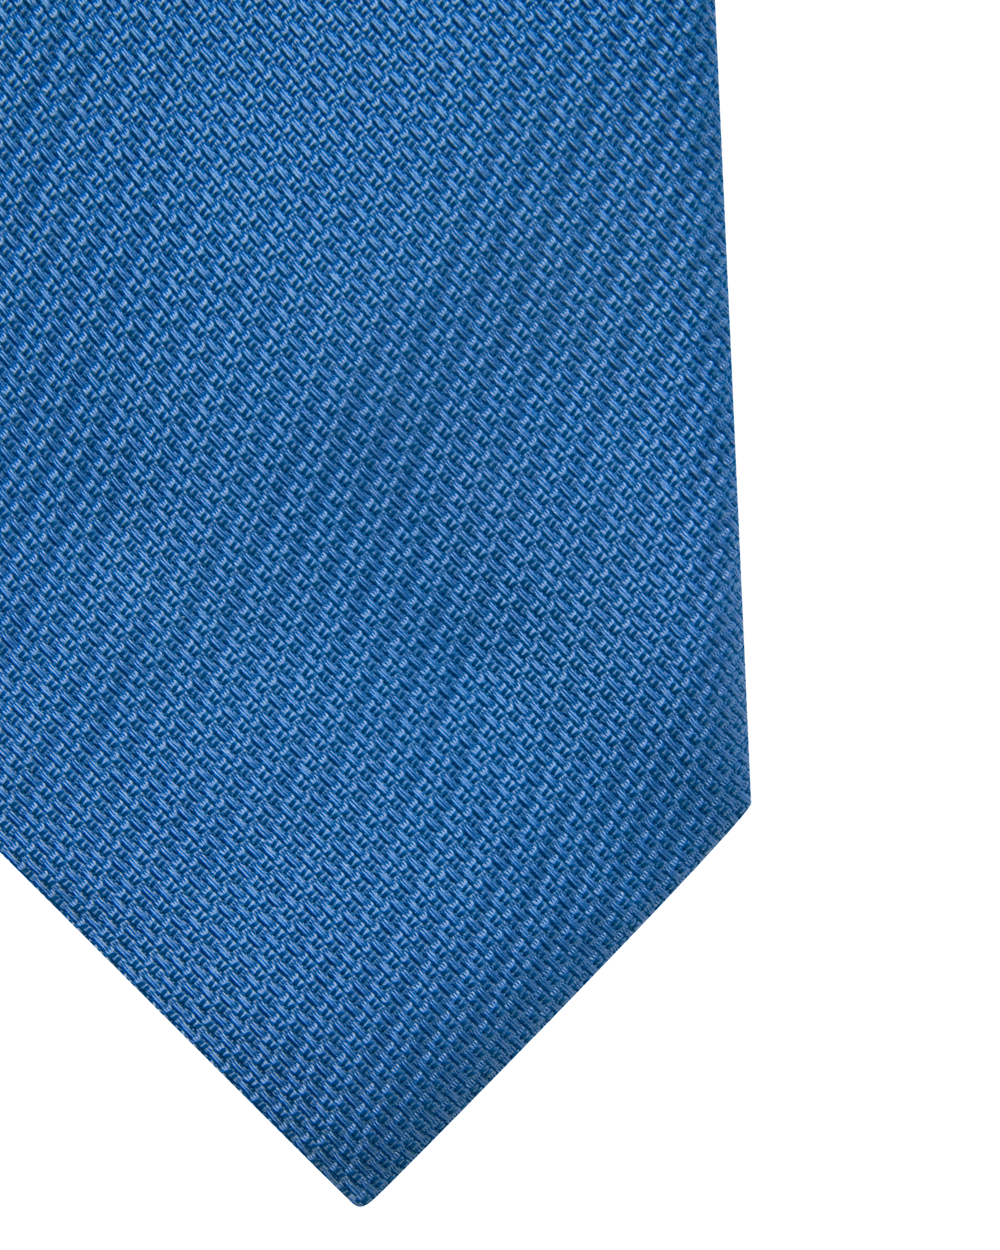 Bluette Jacquard Tie